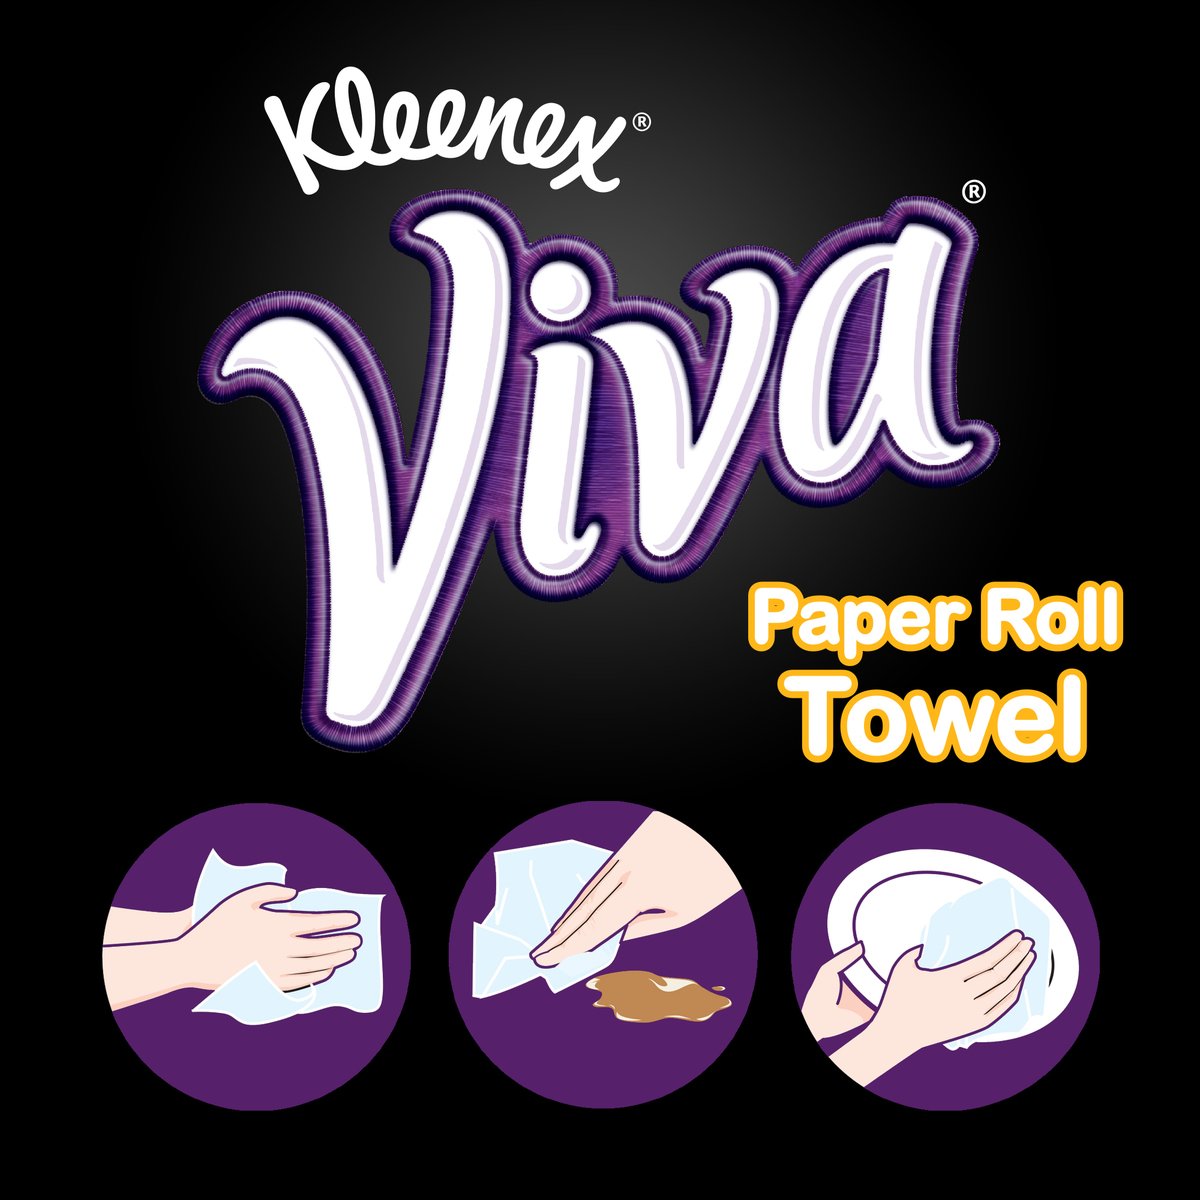 Kleenex Viva Paper Roll Towel, 2 x 250 meter